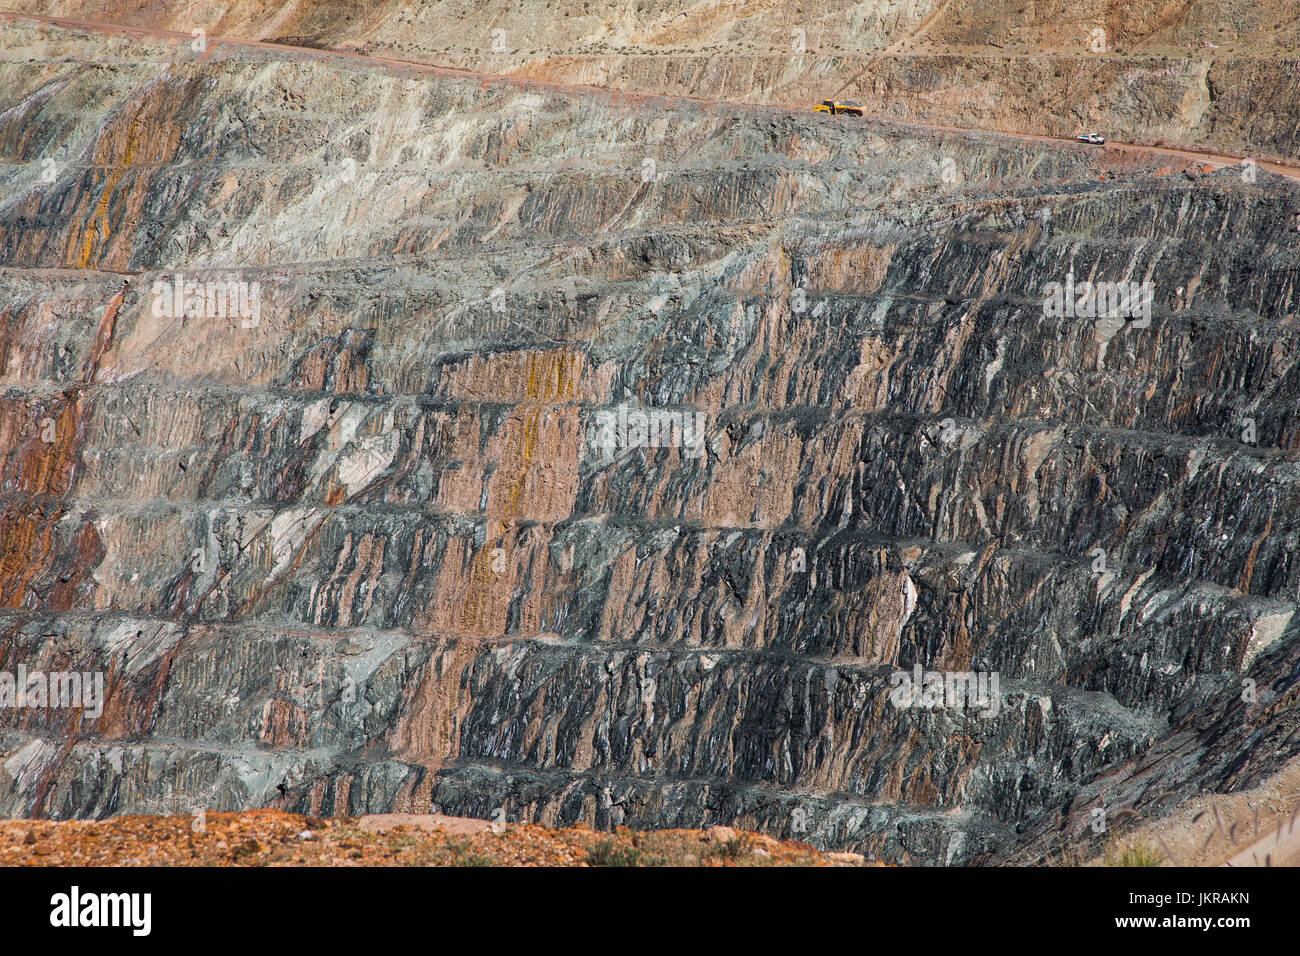 Full frame shot della miniera a cielo aperto, Kalgoorlie, Australia occidentale, Australia Foto Stock